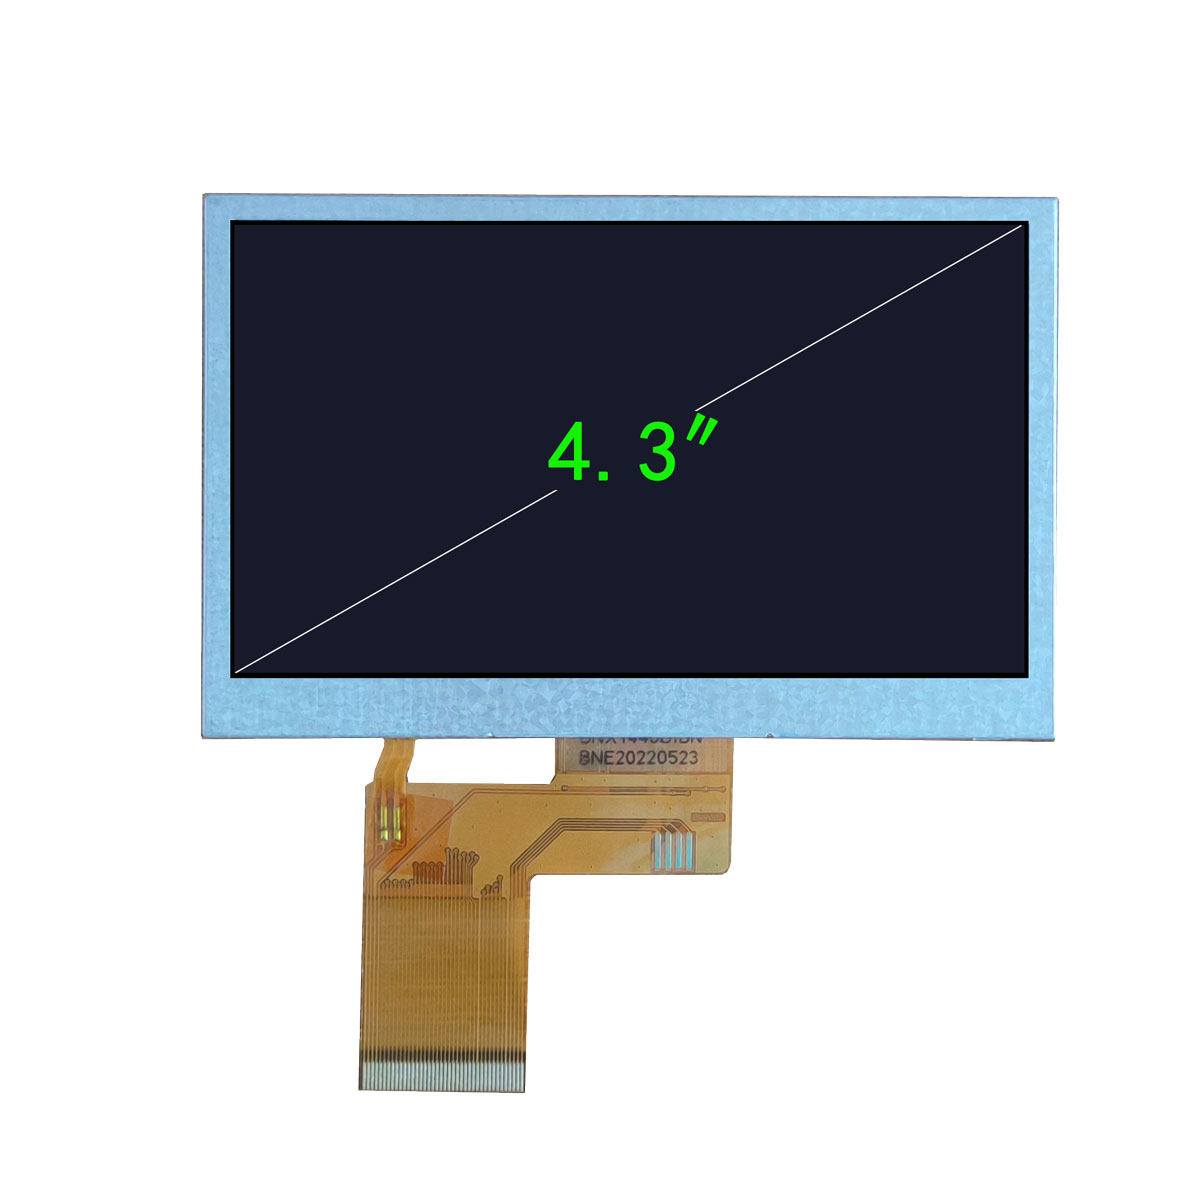 LCD显示屏液晶模块各部分的功能有哪些？